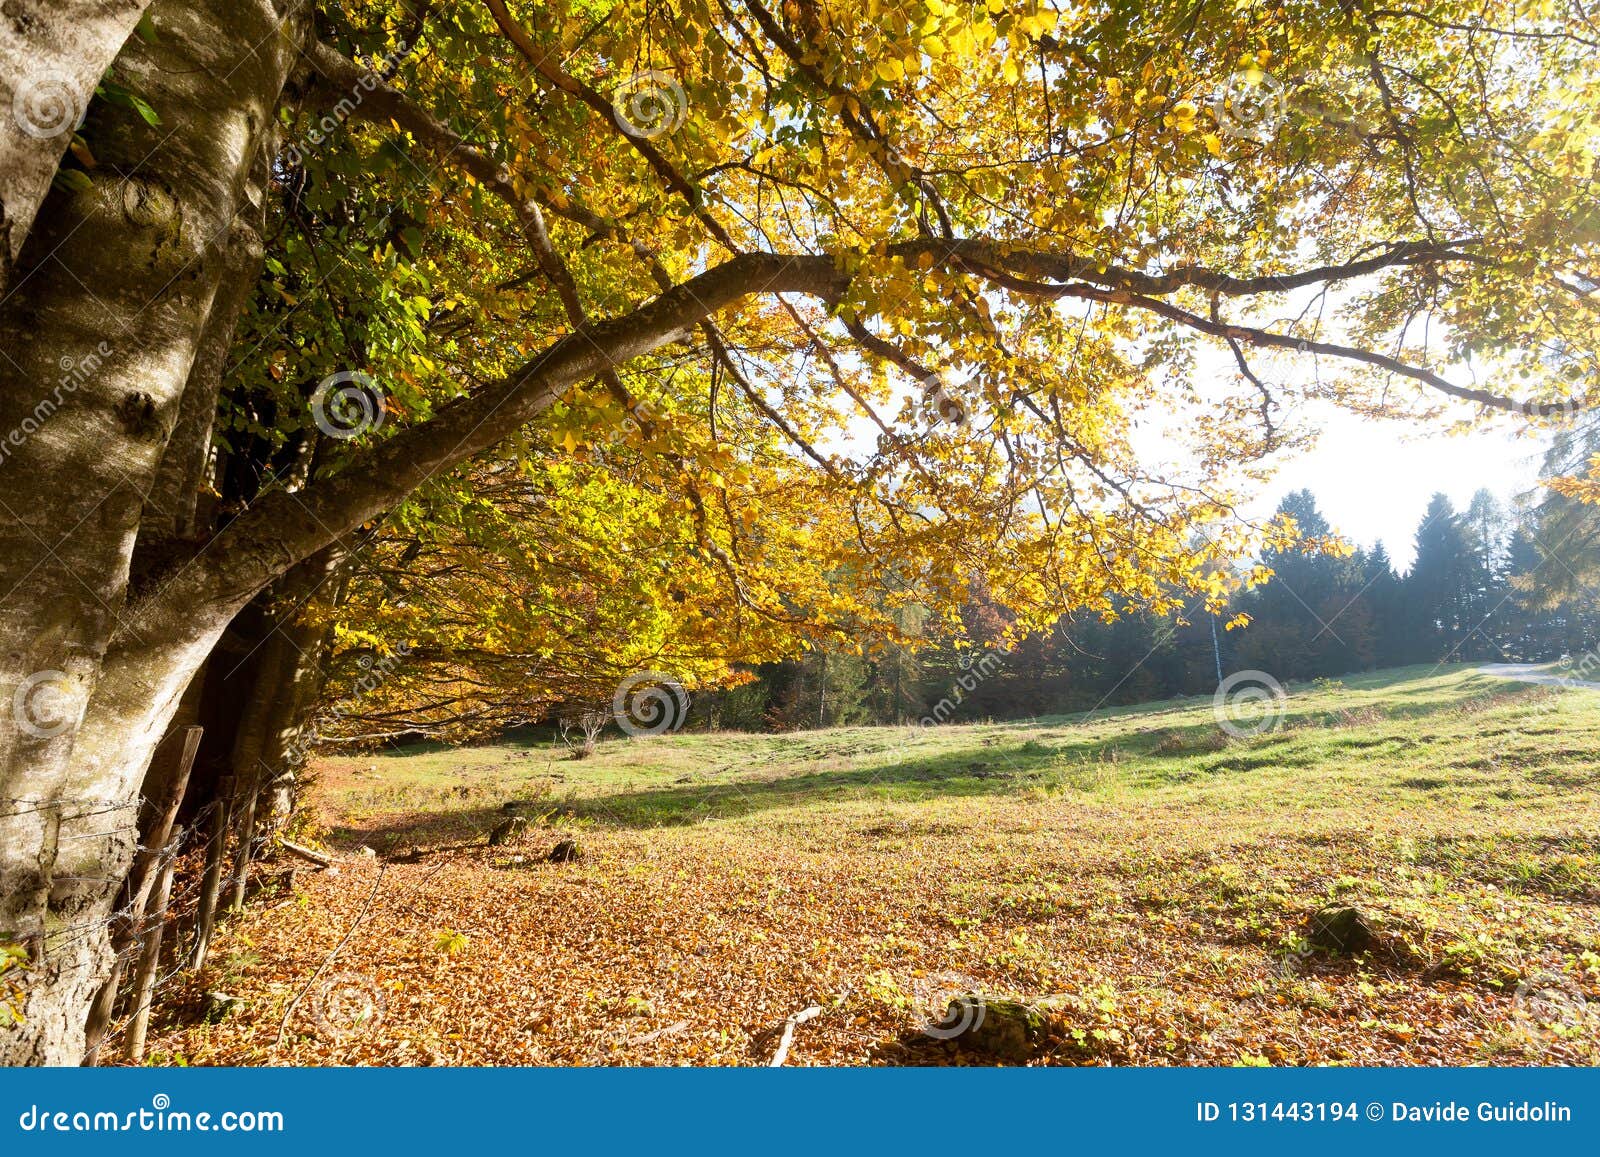 trees in autumn season background. beauty in nature. autumn lansdscape